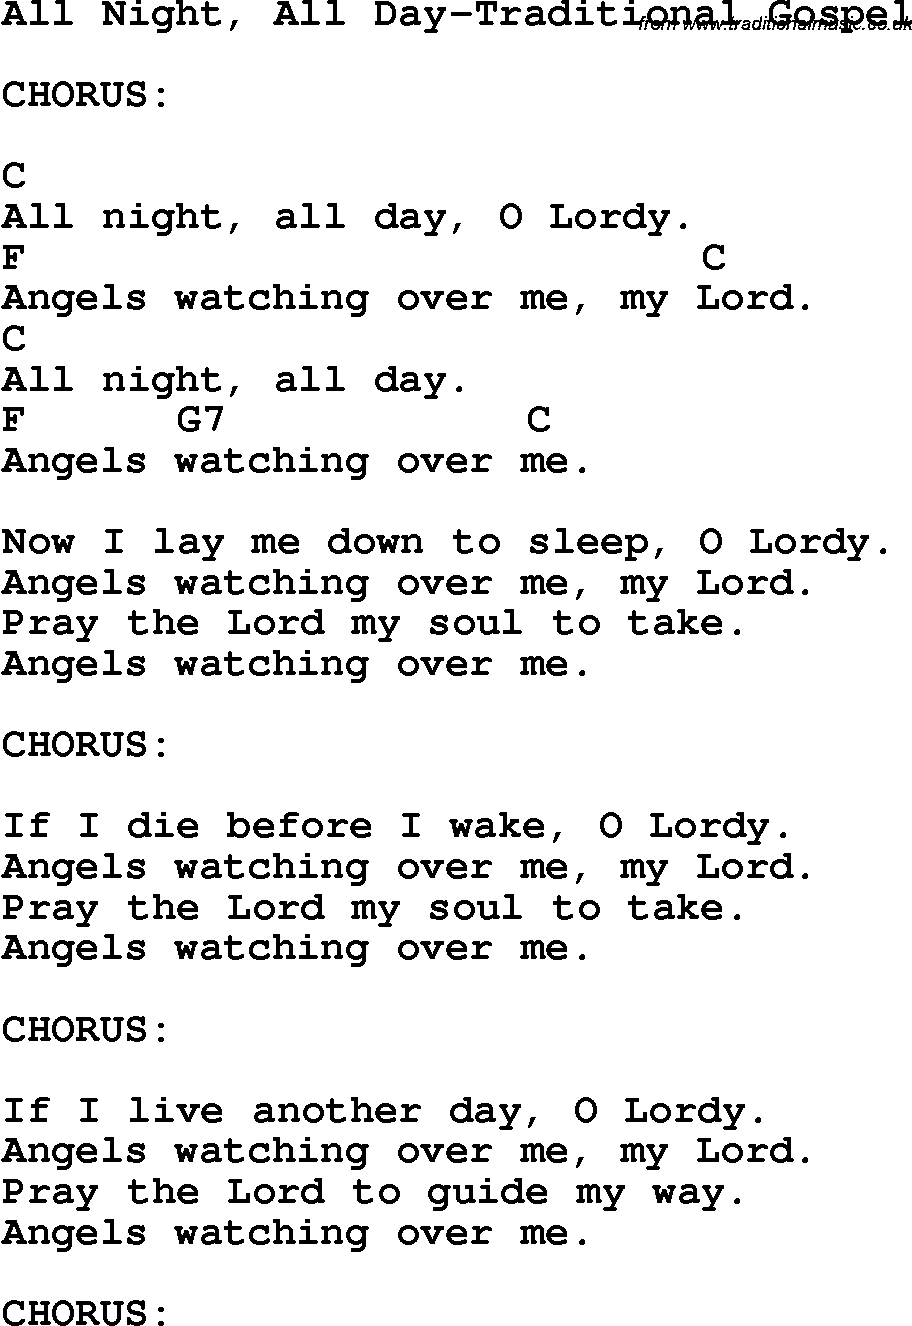 Christian Chlidrens Song All Night, All Day-Traditional Gospel Lyrics